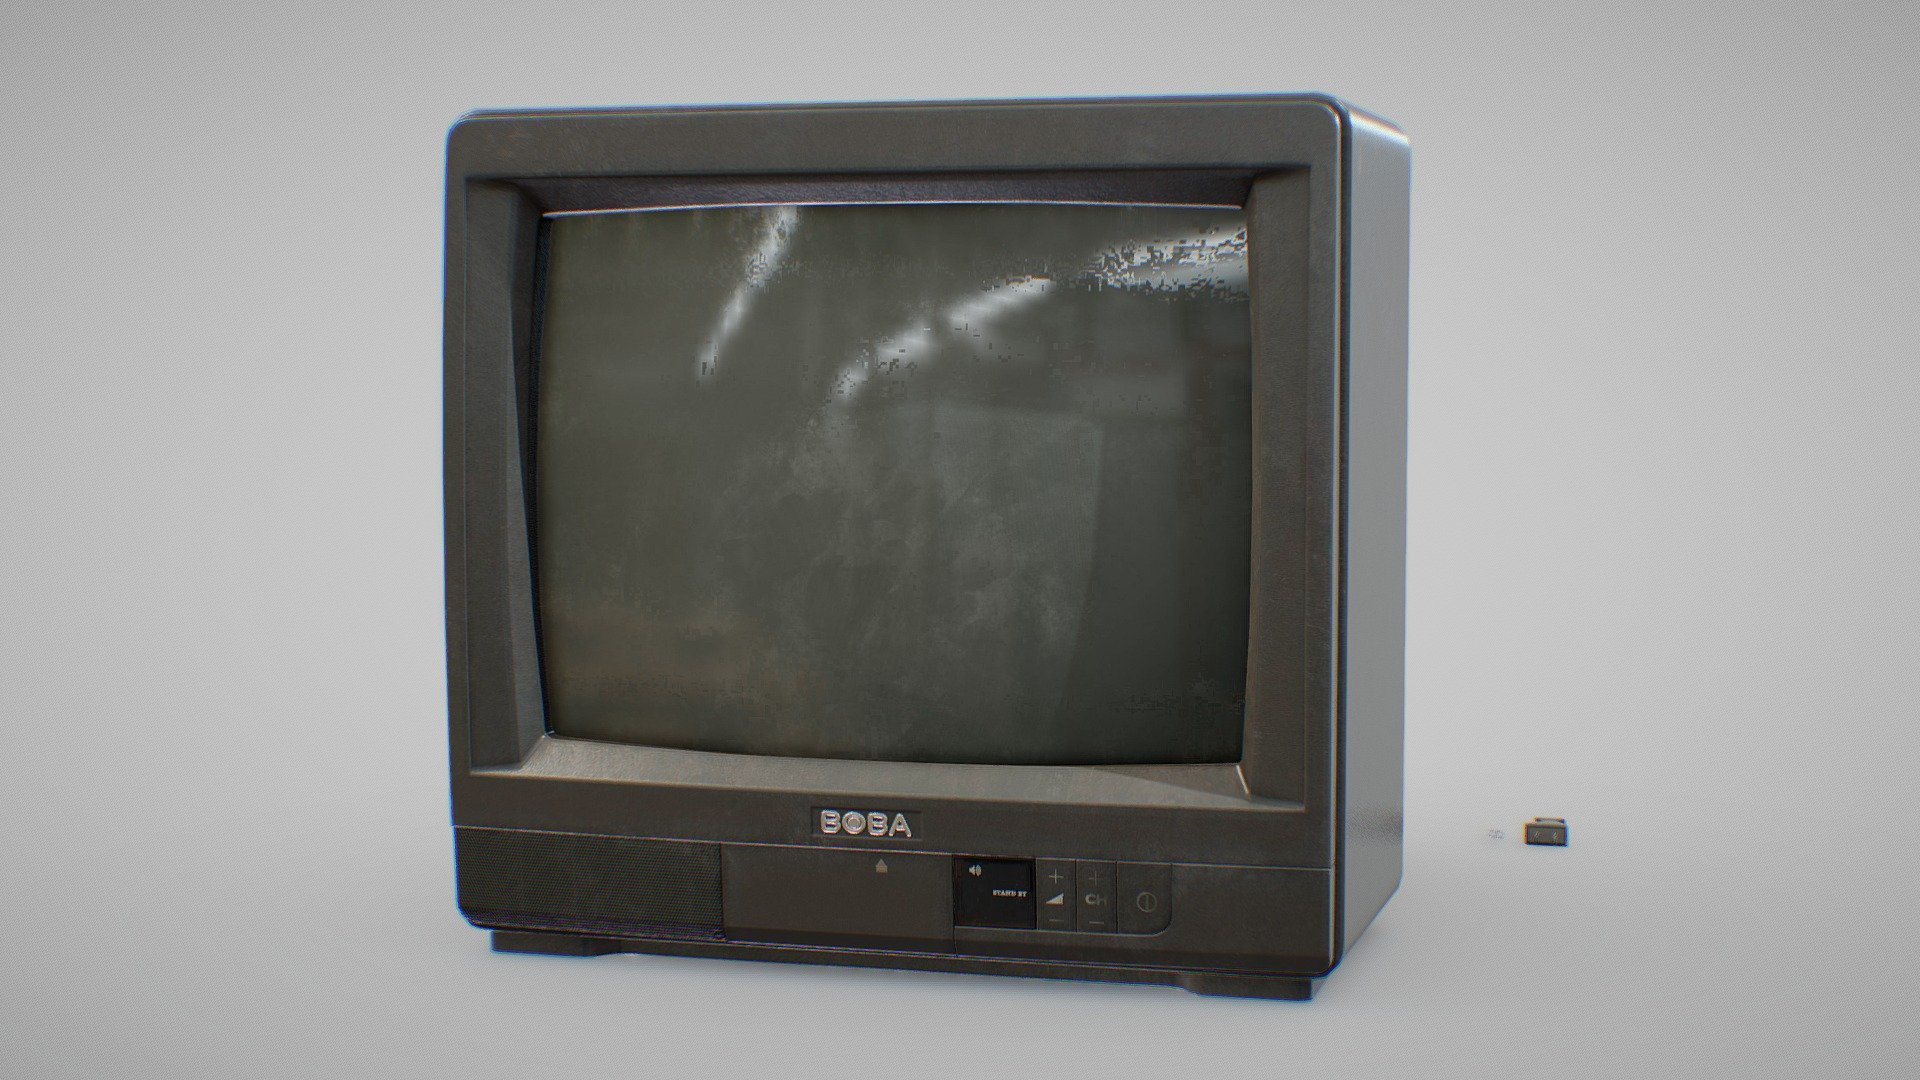 1990s tv set